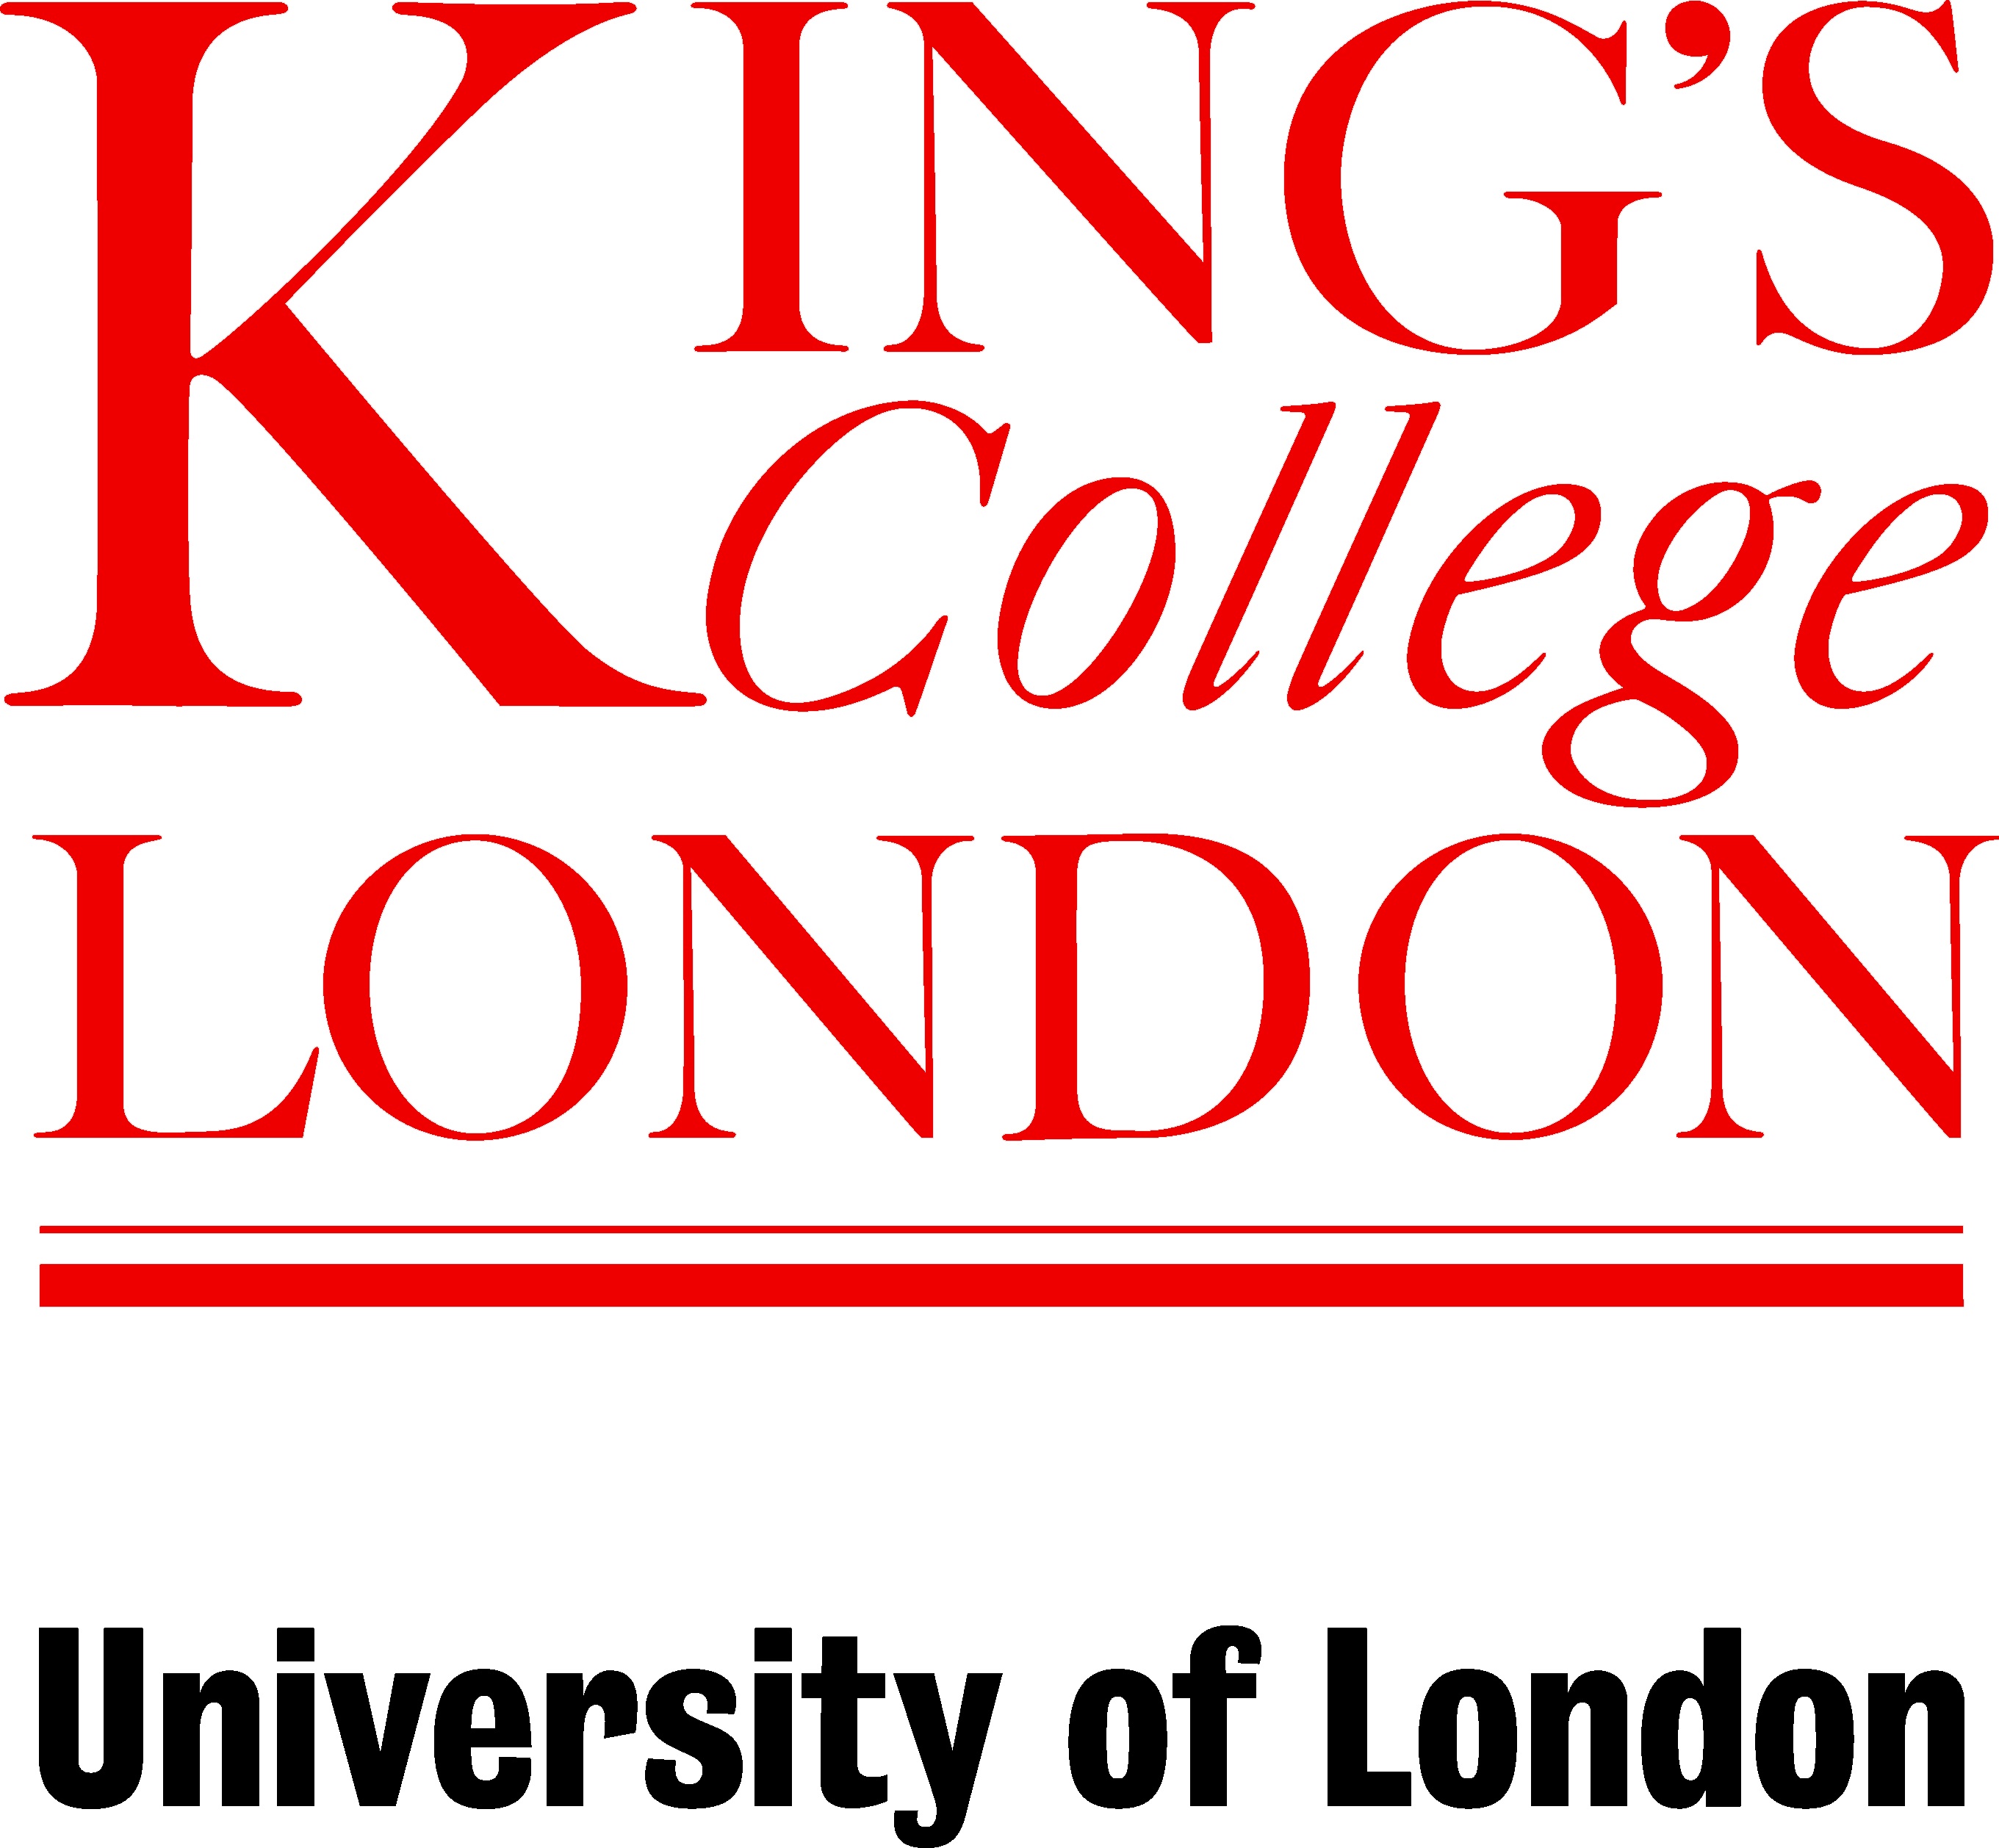 https://www.pro-manchester.co.uk/wp-content/uploads/2020/05/kings-college-london.jpg